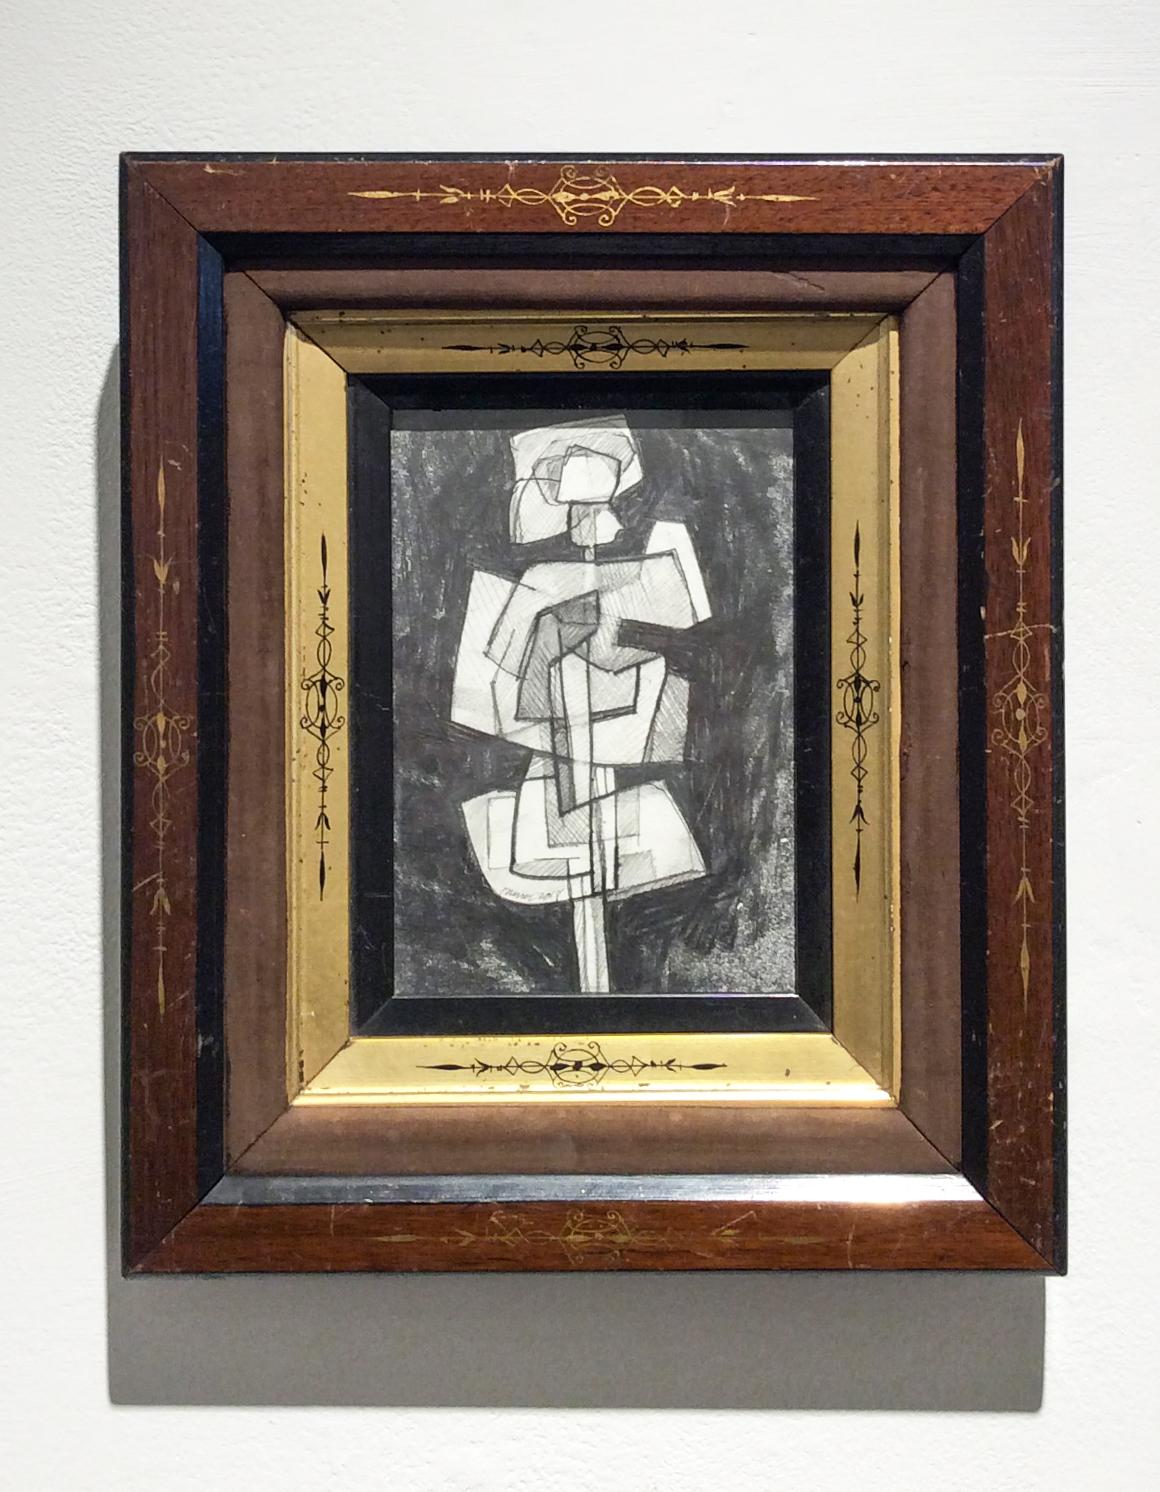 Infanta XLIII (Small Abstract Cubist Graphite Drawing in Vintage Eastlake Frame) - Art by David Dew Bruner